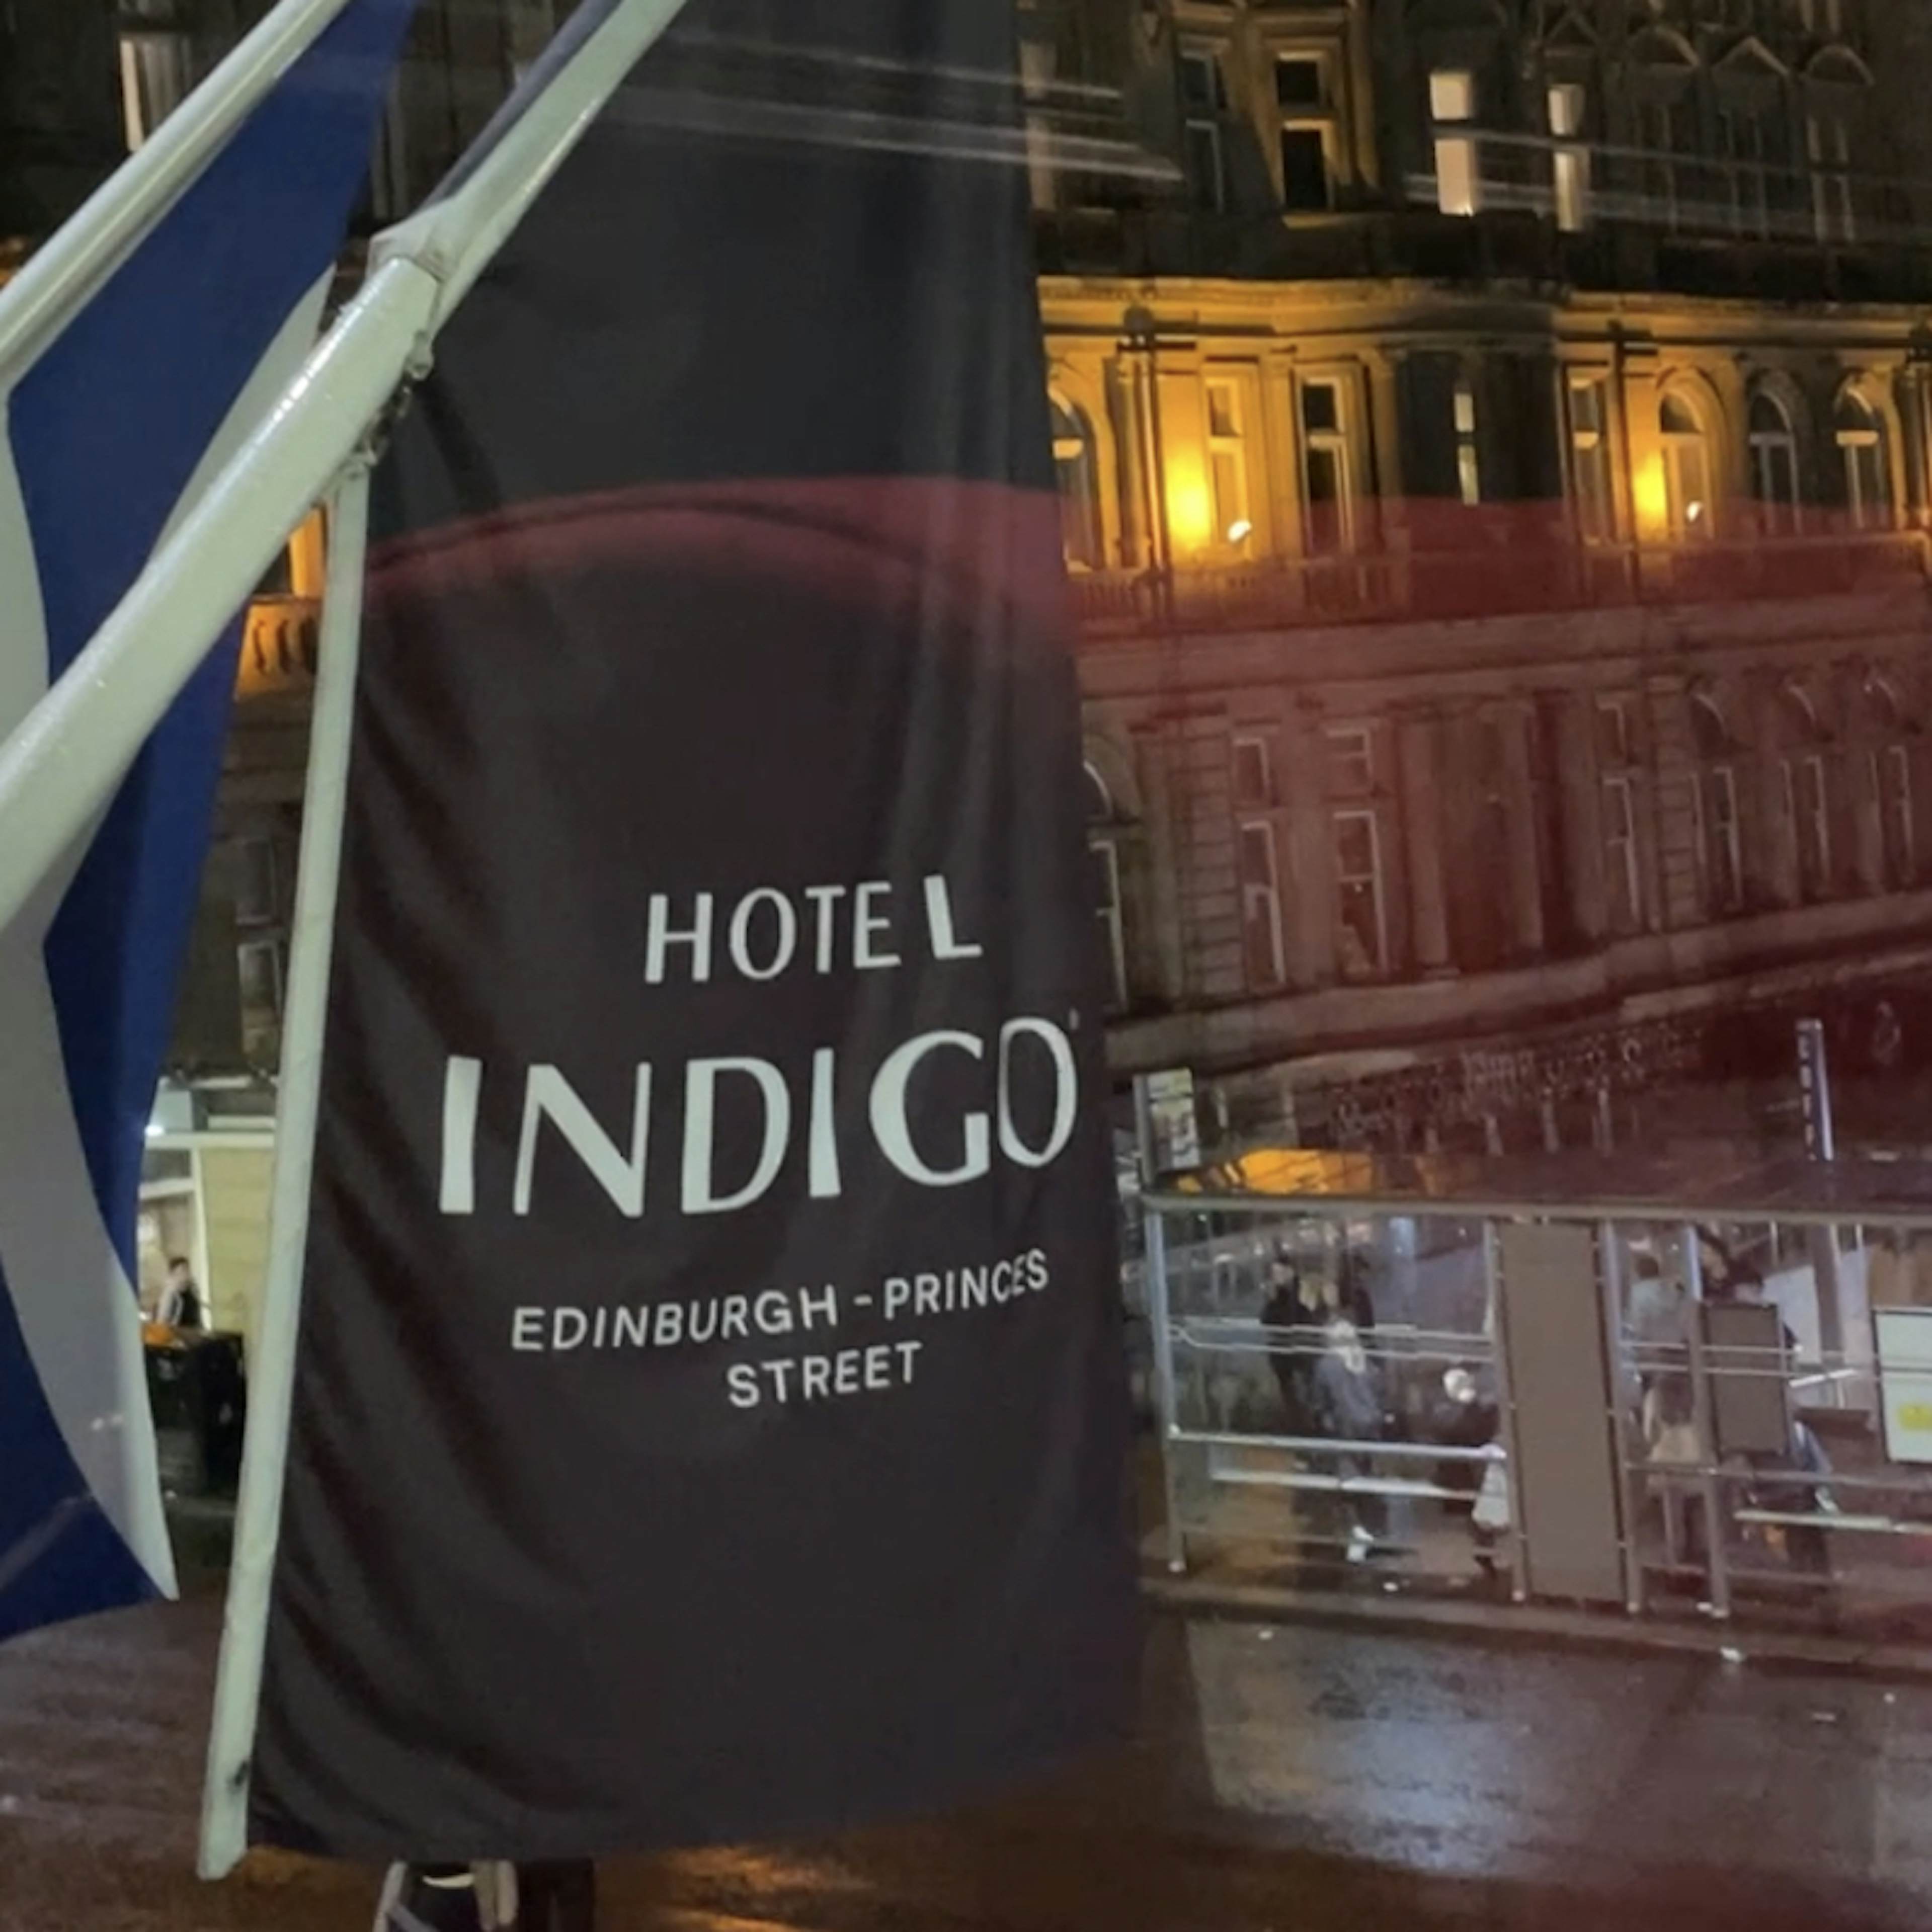 Hotel Indigo Edinburgh - Princes Street - image 3